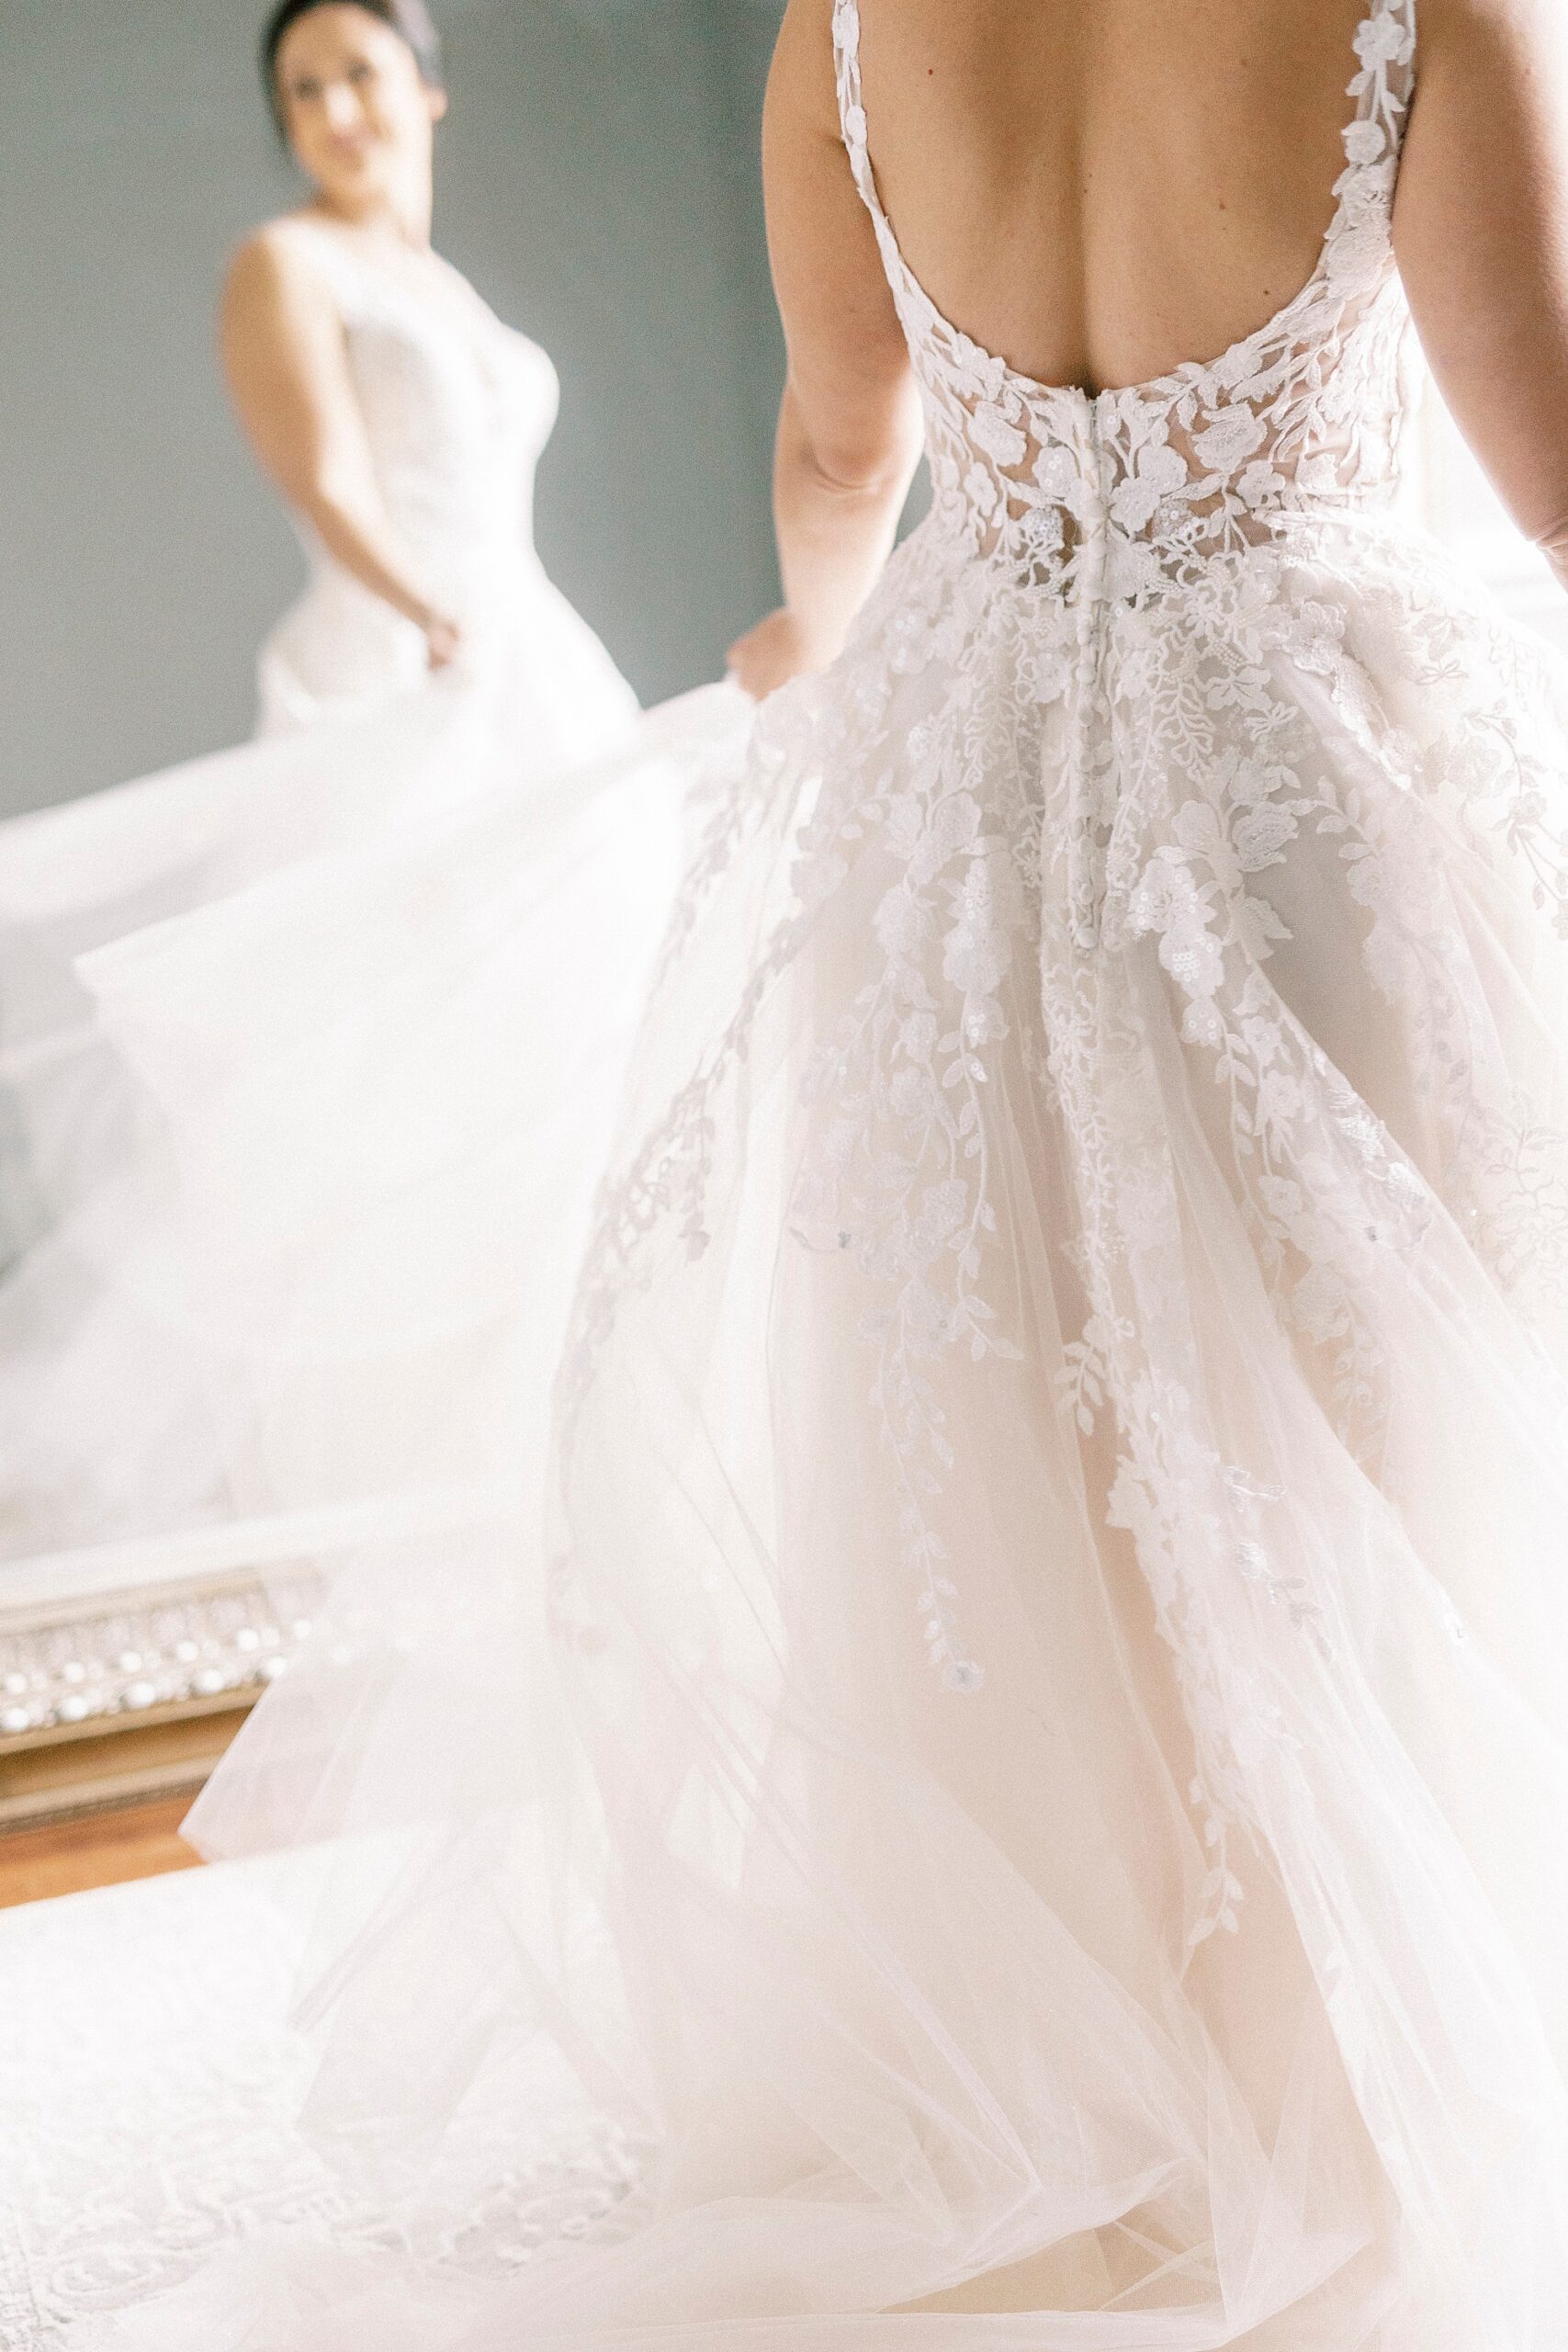 bride twirls wedding dress in front of mirror in bridal suite at Separk Mansion